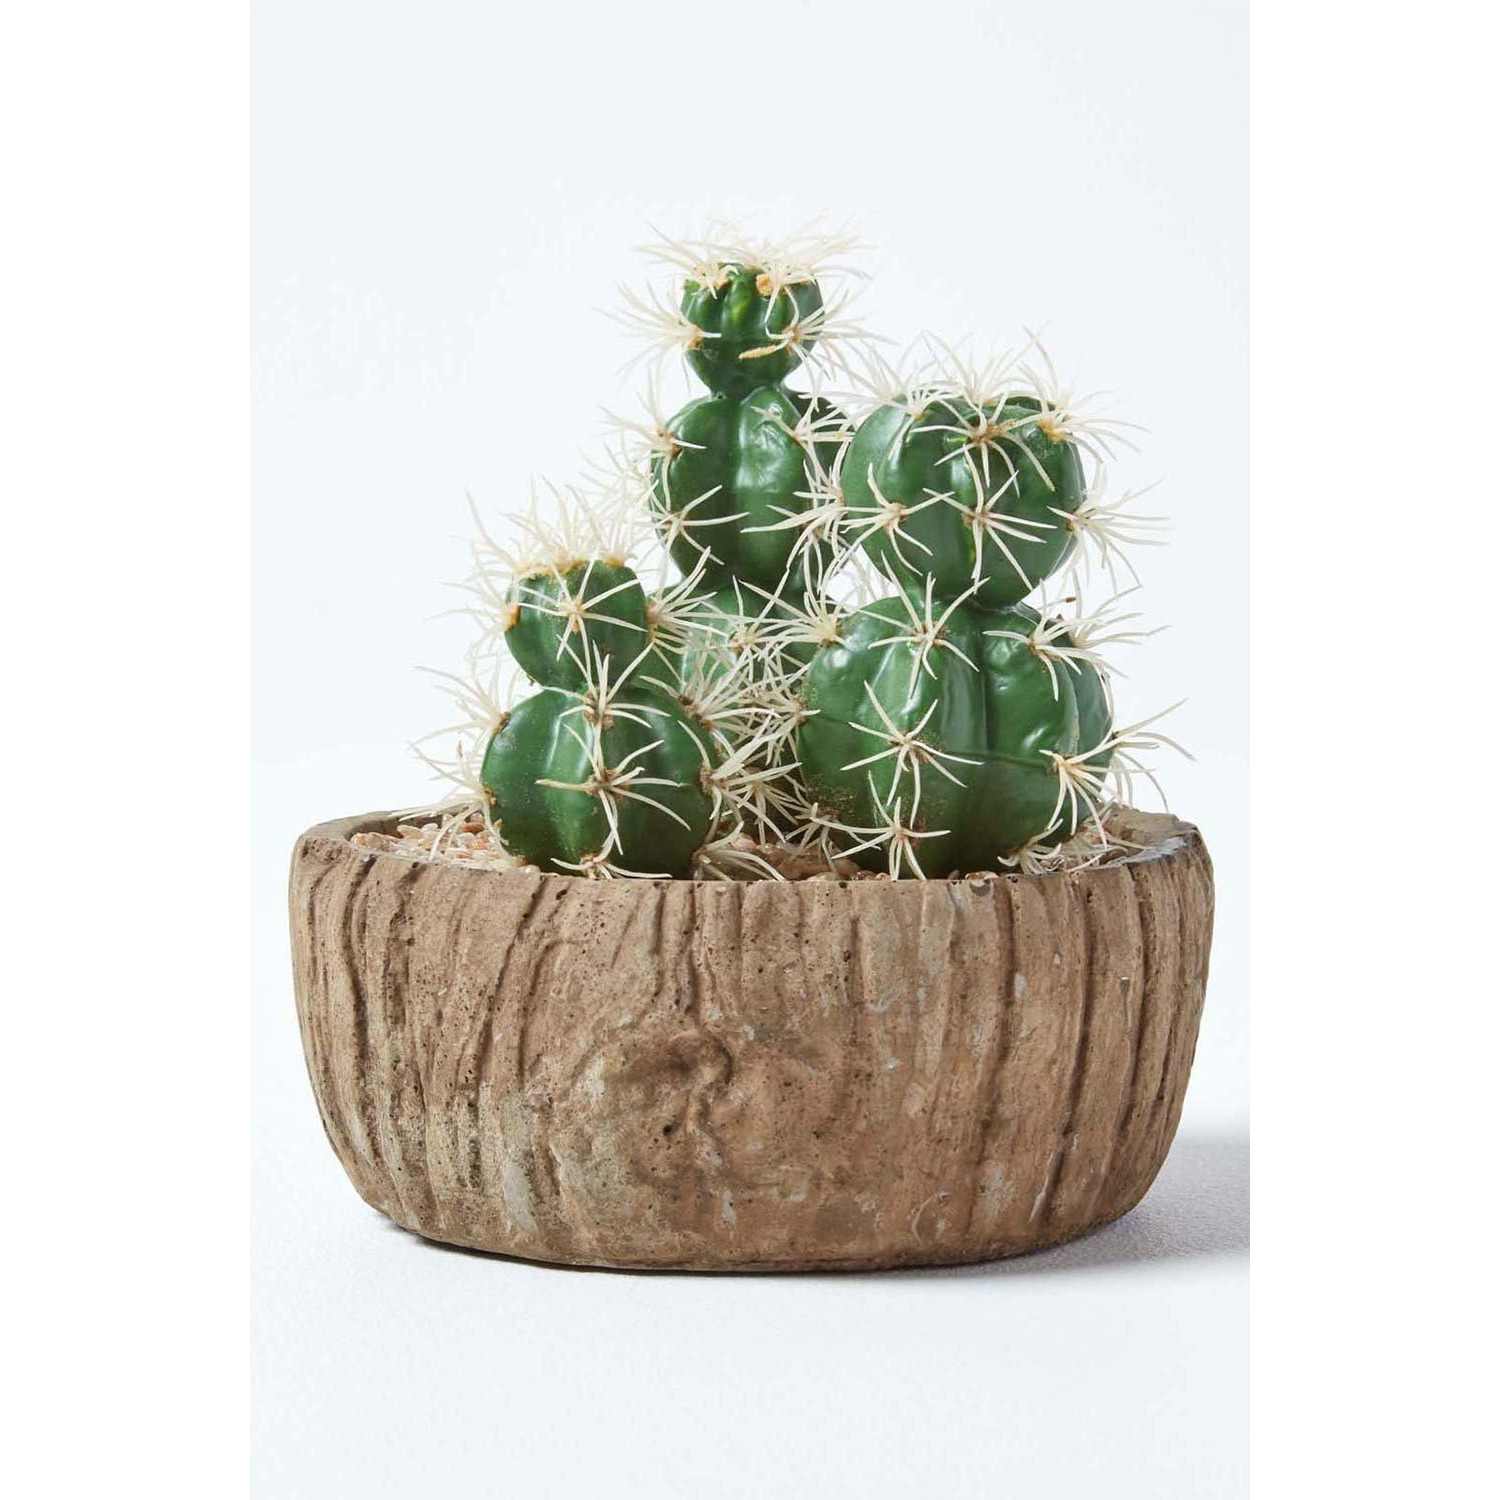 Echinocactus Artificial Cactus in Round Wooden Planter, 15 cm Tall - image 1